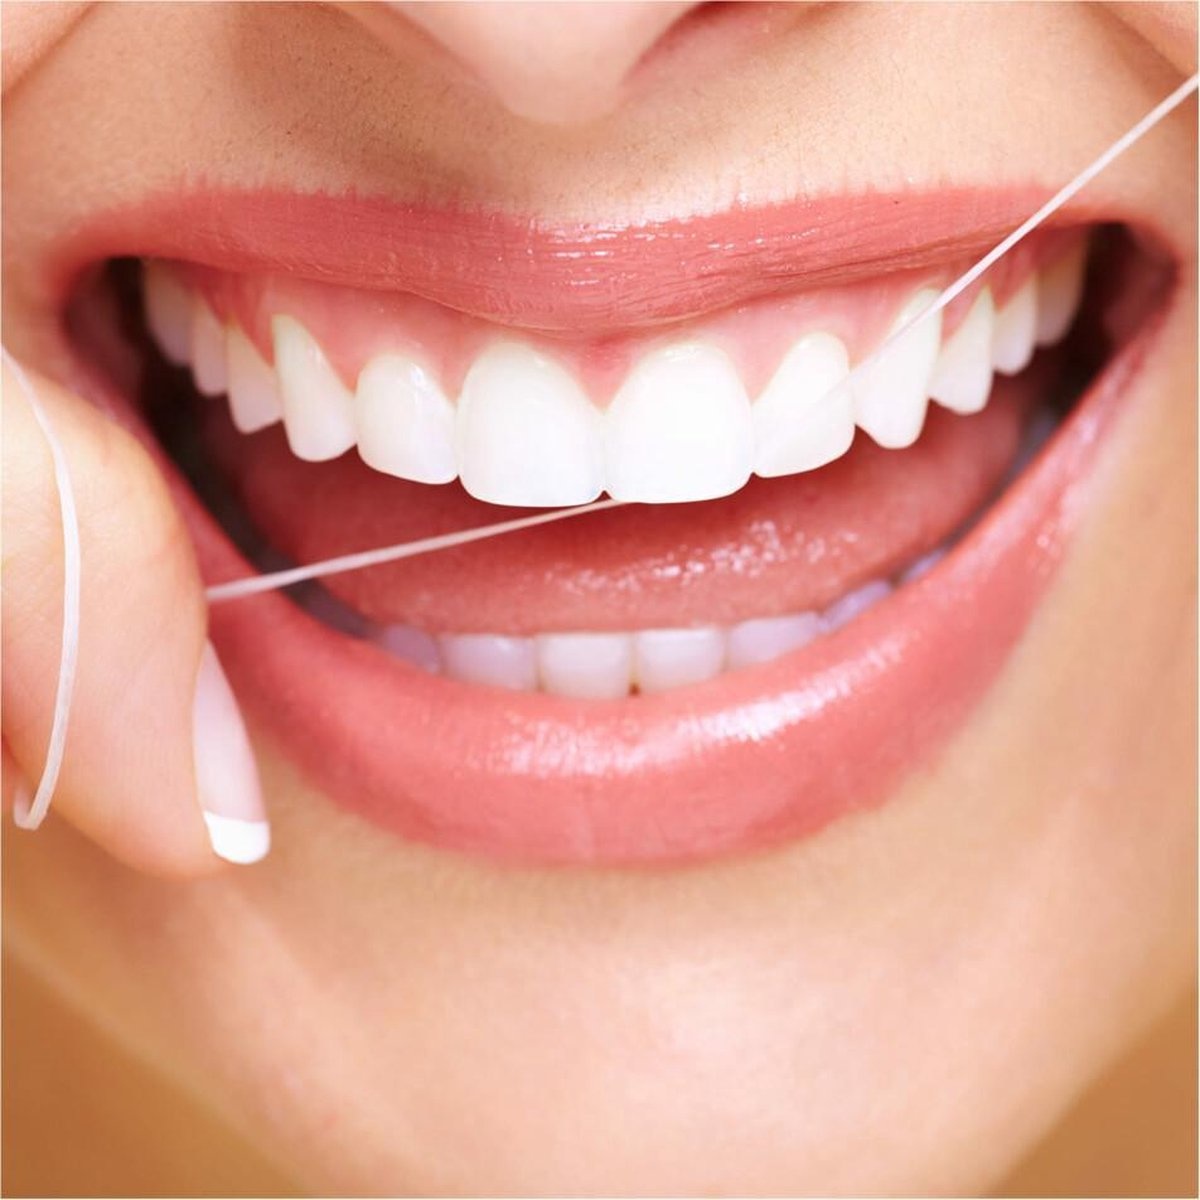 Oral-B Pro-Expert Premium - 40m - Dental Floss